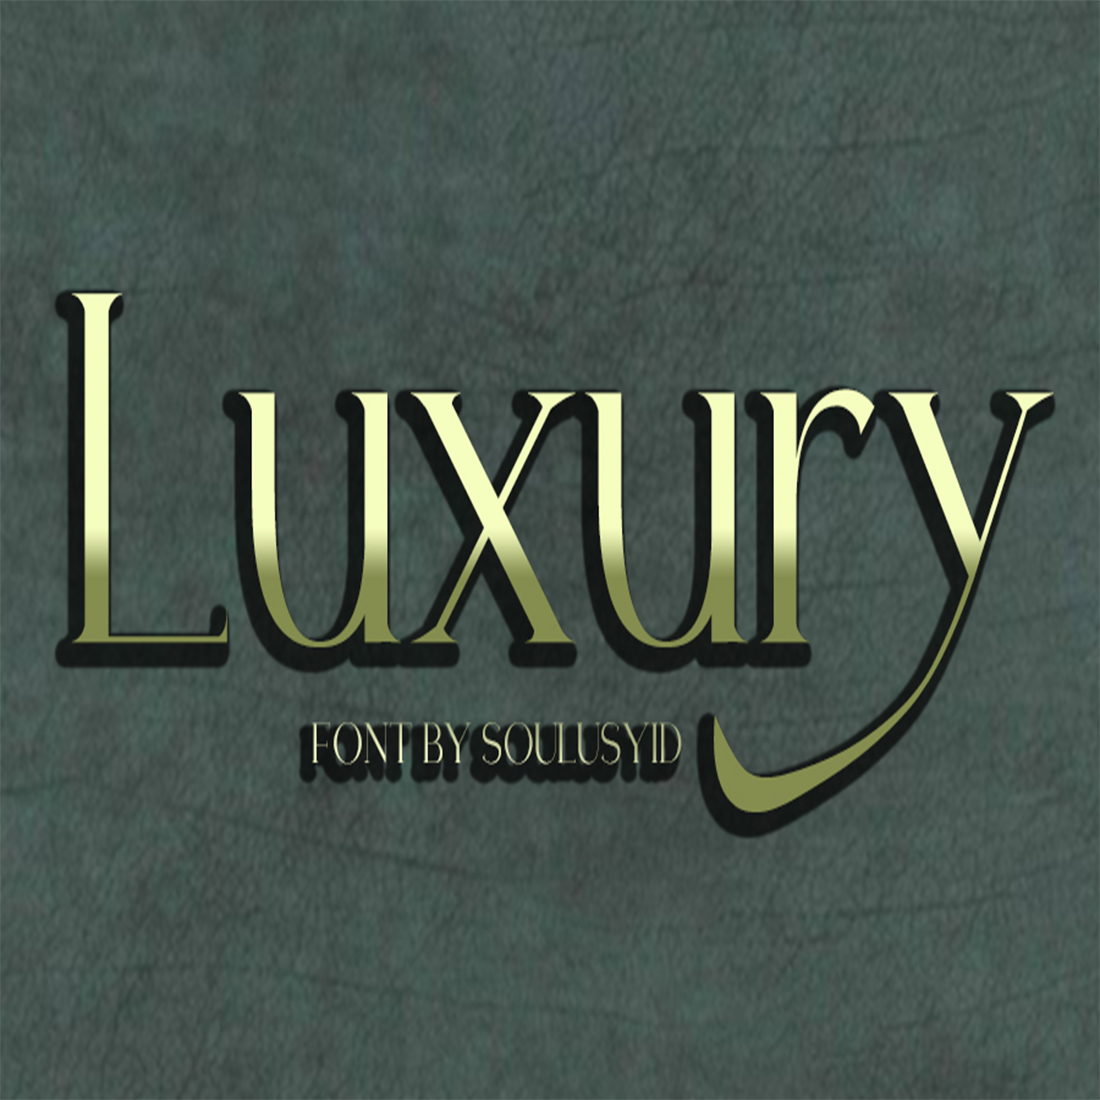 Luxury cover image.